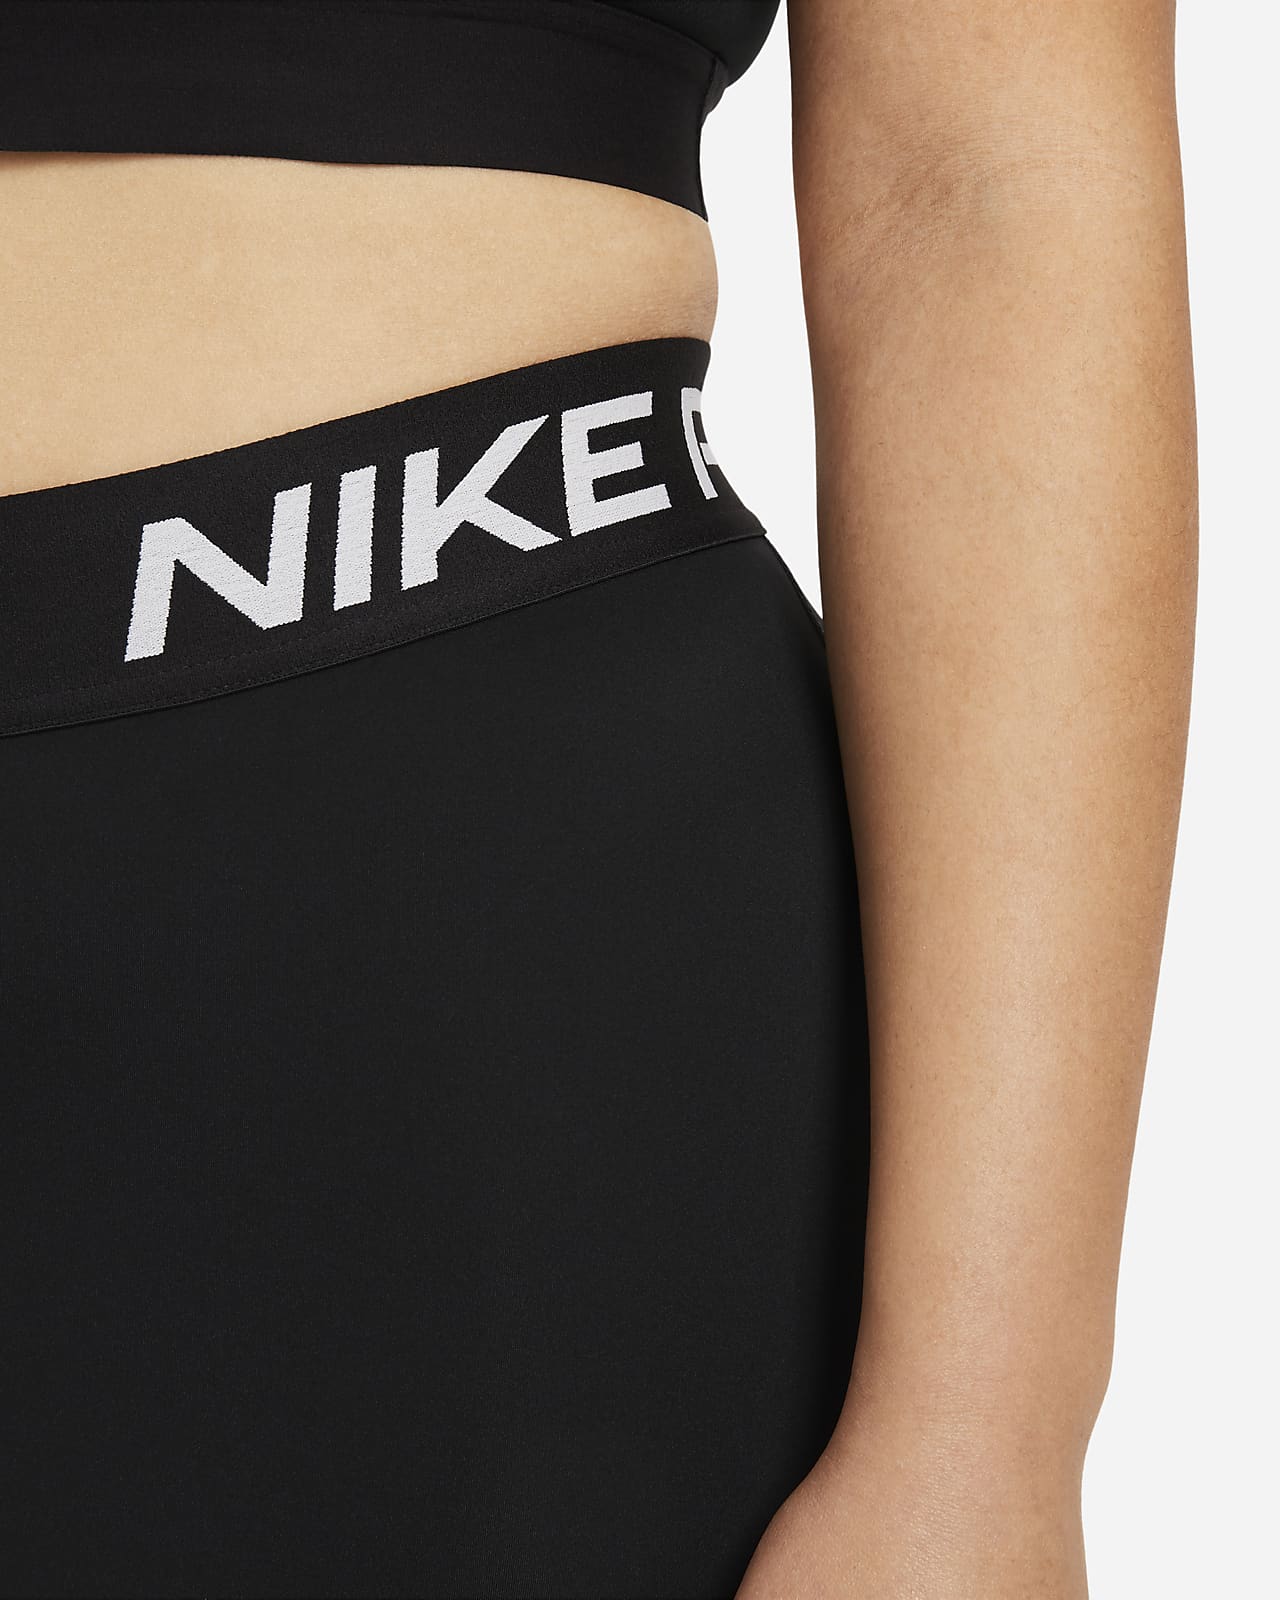 Legging femme Nike Pro 365 - Nike - Marques - Textile